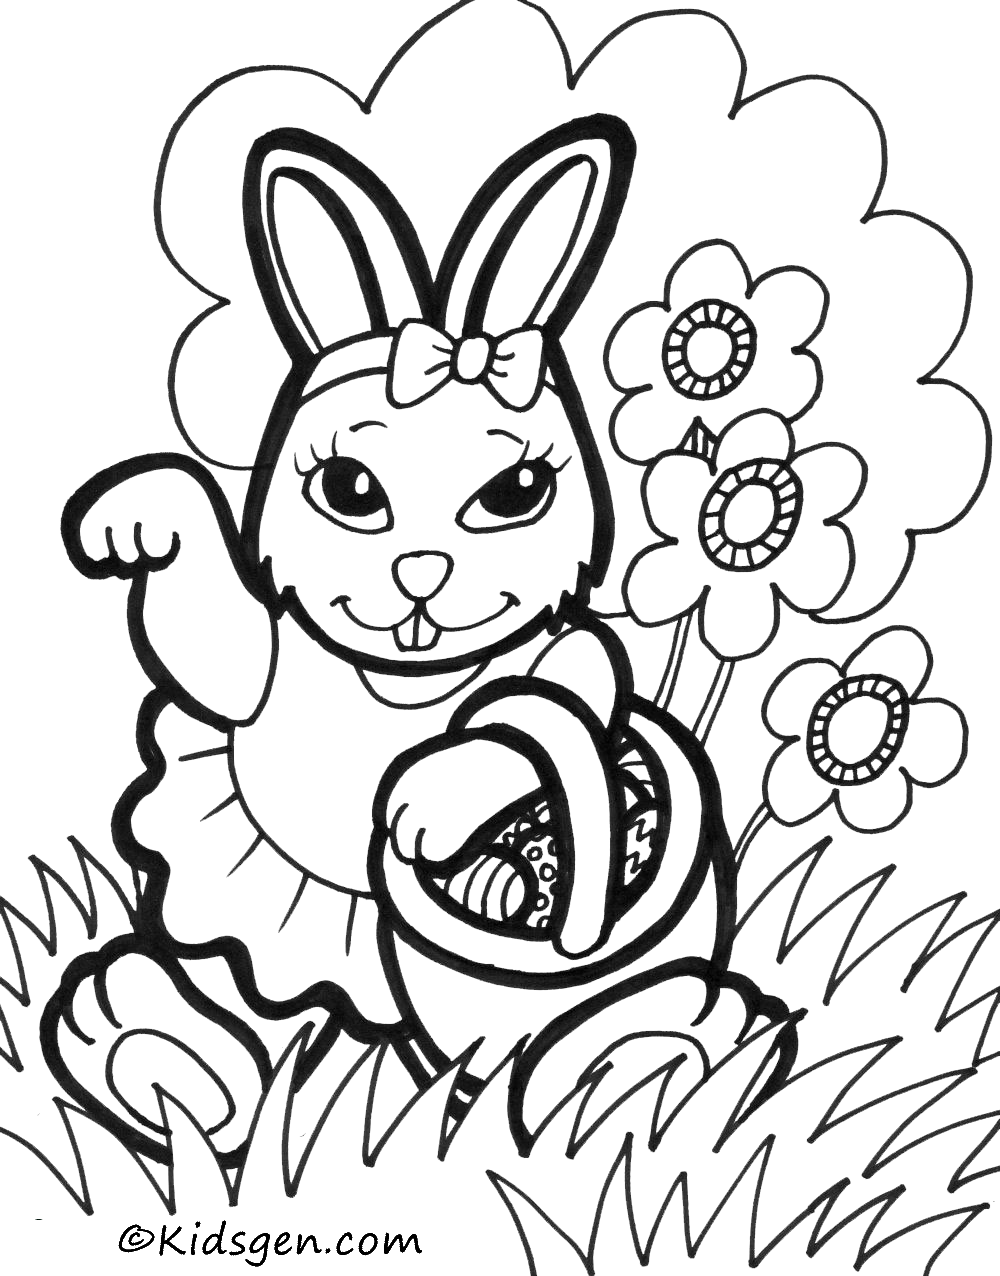 Clipart rabbit coloring page, Clipart rabbit coloring page Transparent